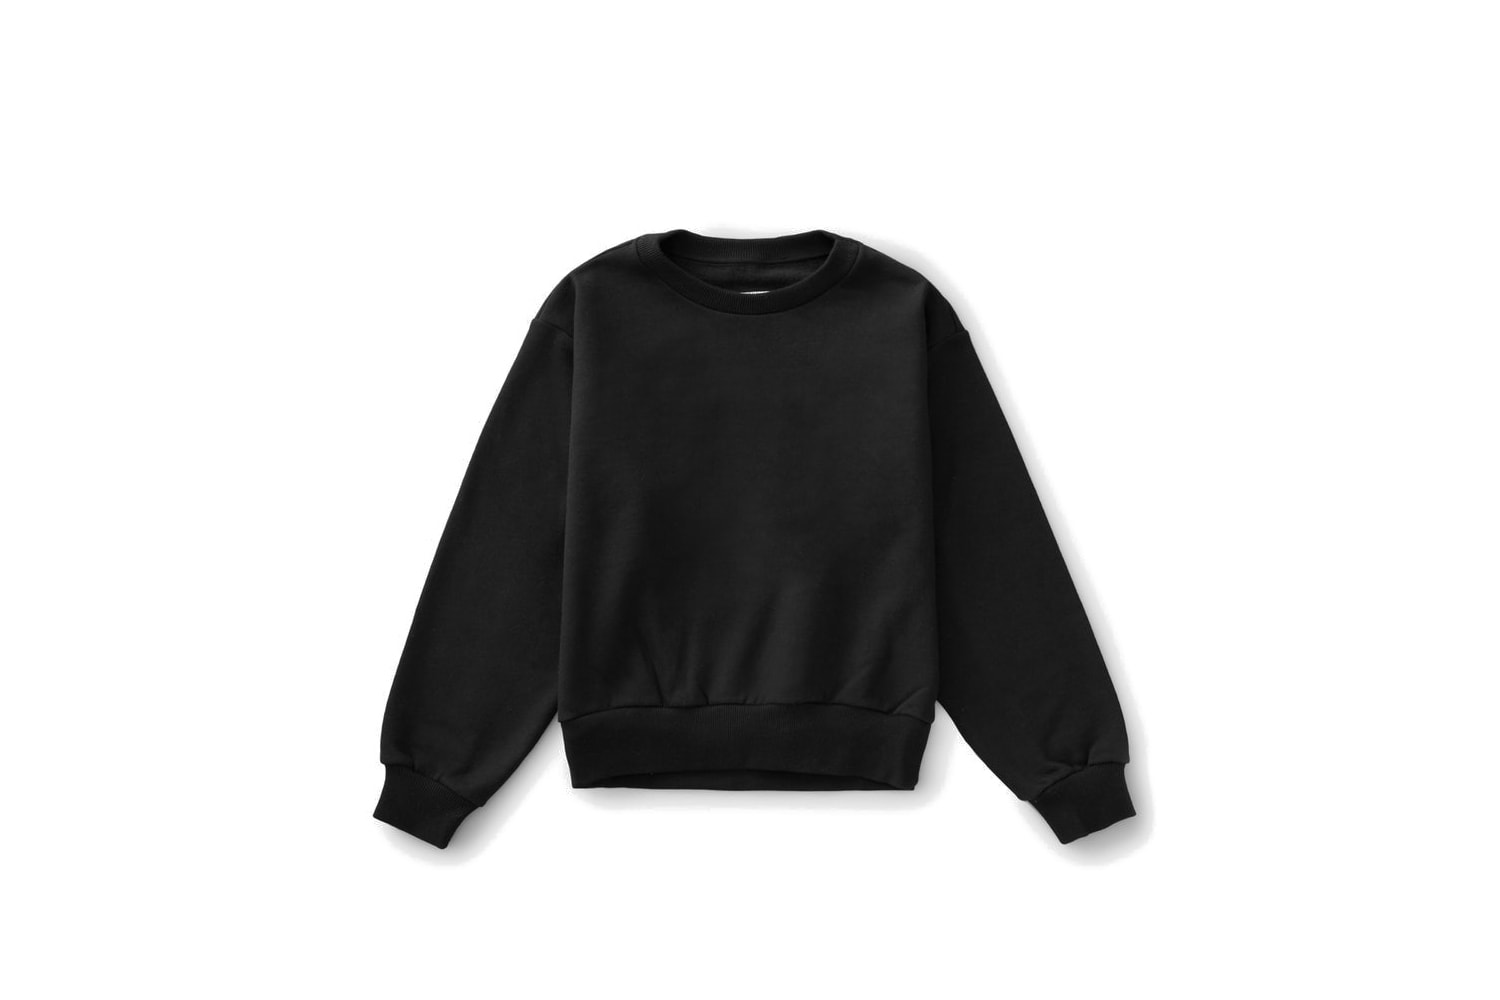 Everlane Oversize Sweater Fleece Crewneck Sweatshirt White Grey Blue Black Basic Staple Pieces Cozy